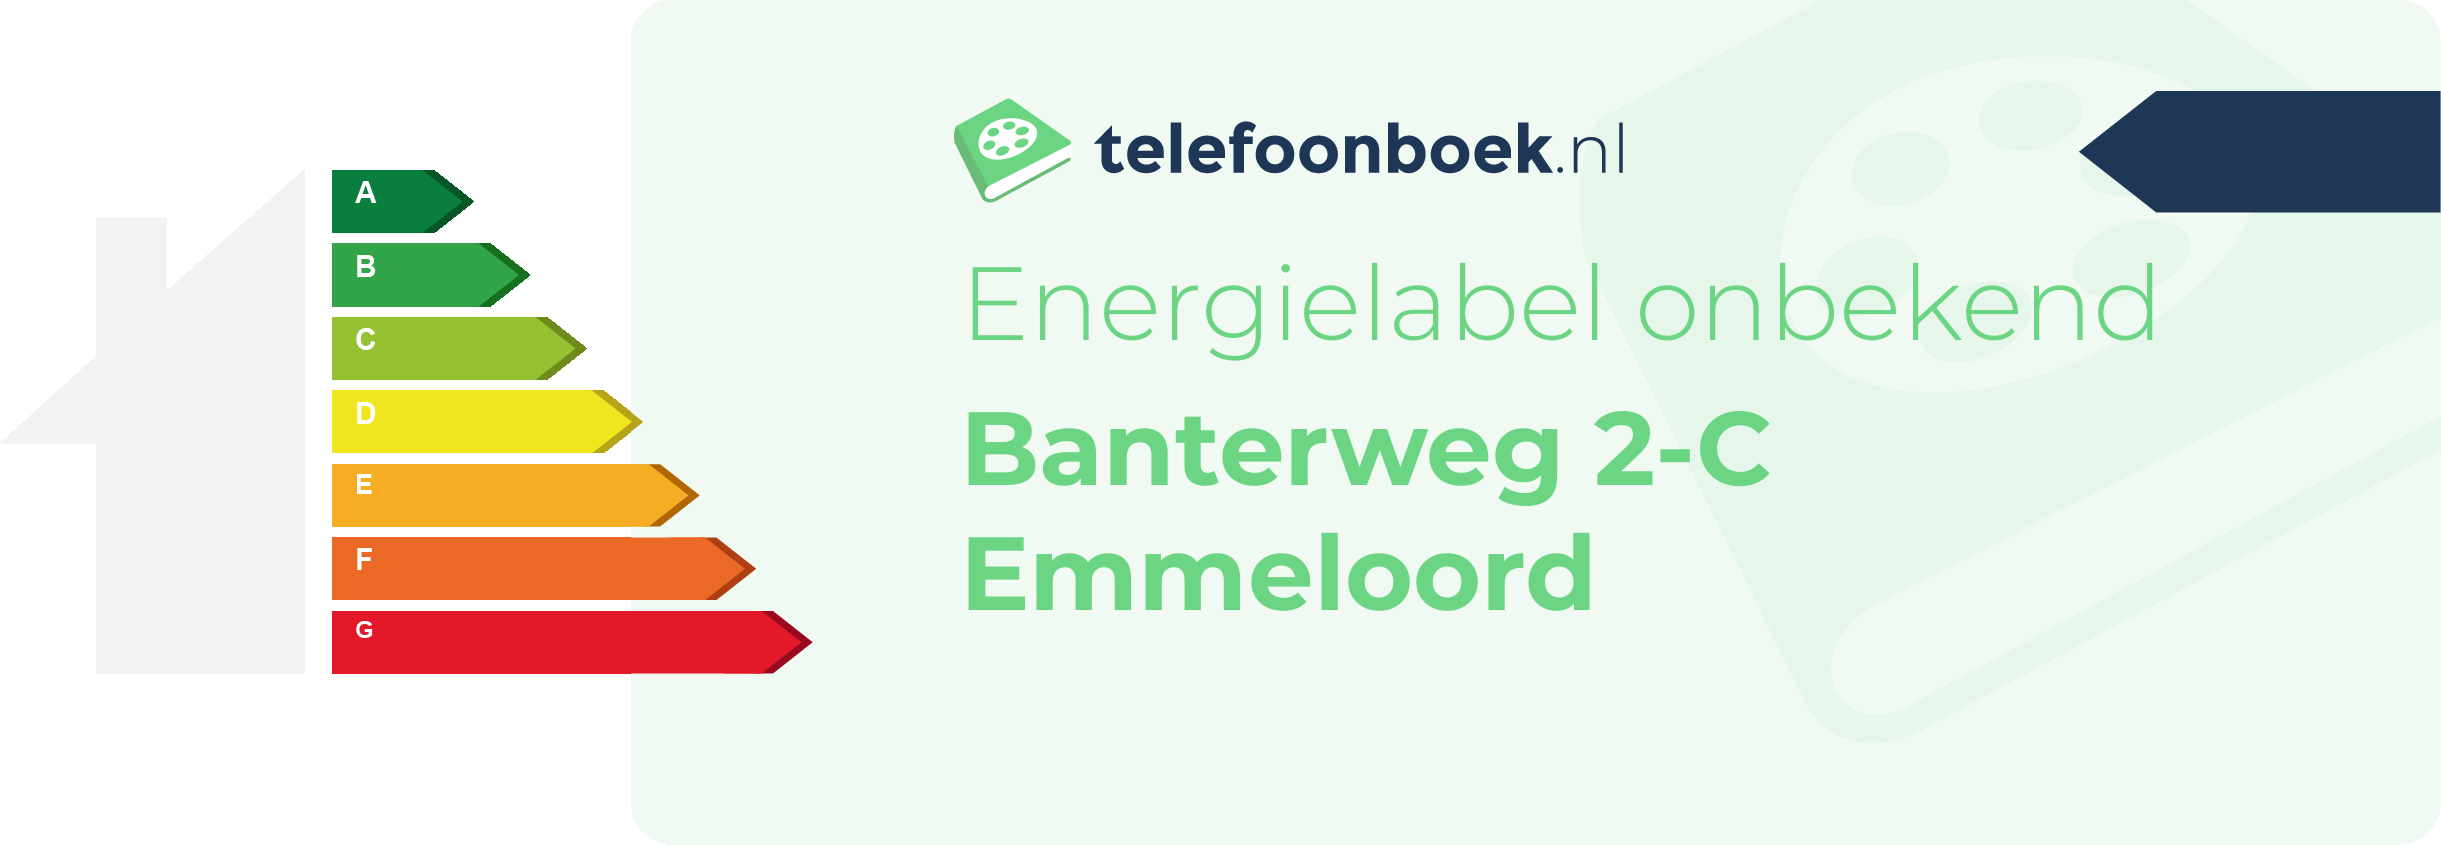 Energielabel Banterweg 2-C Emmeloord